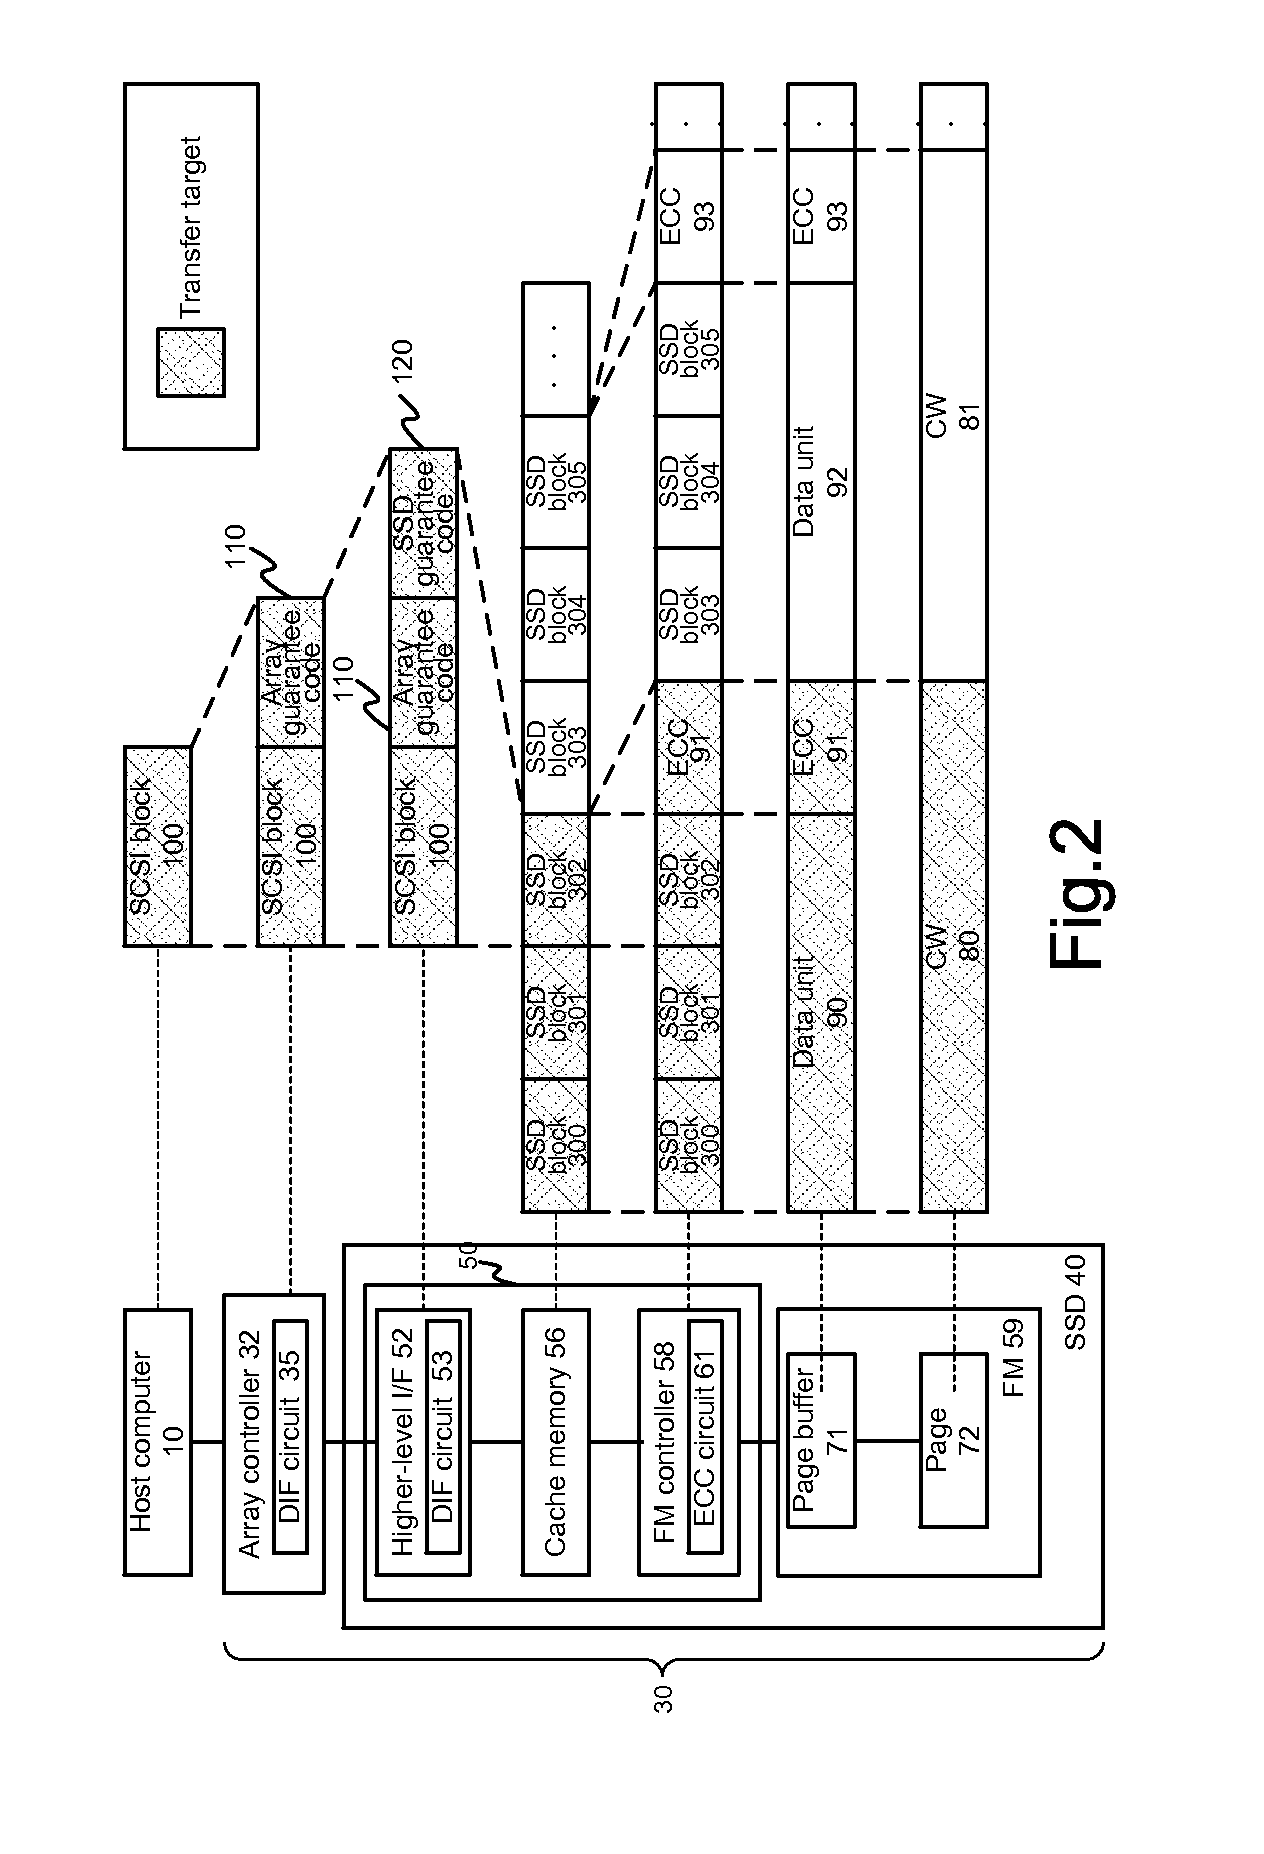 Storage apparatus and data control method